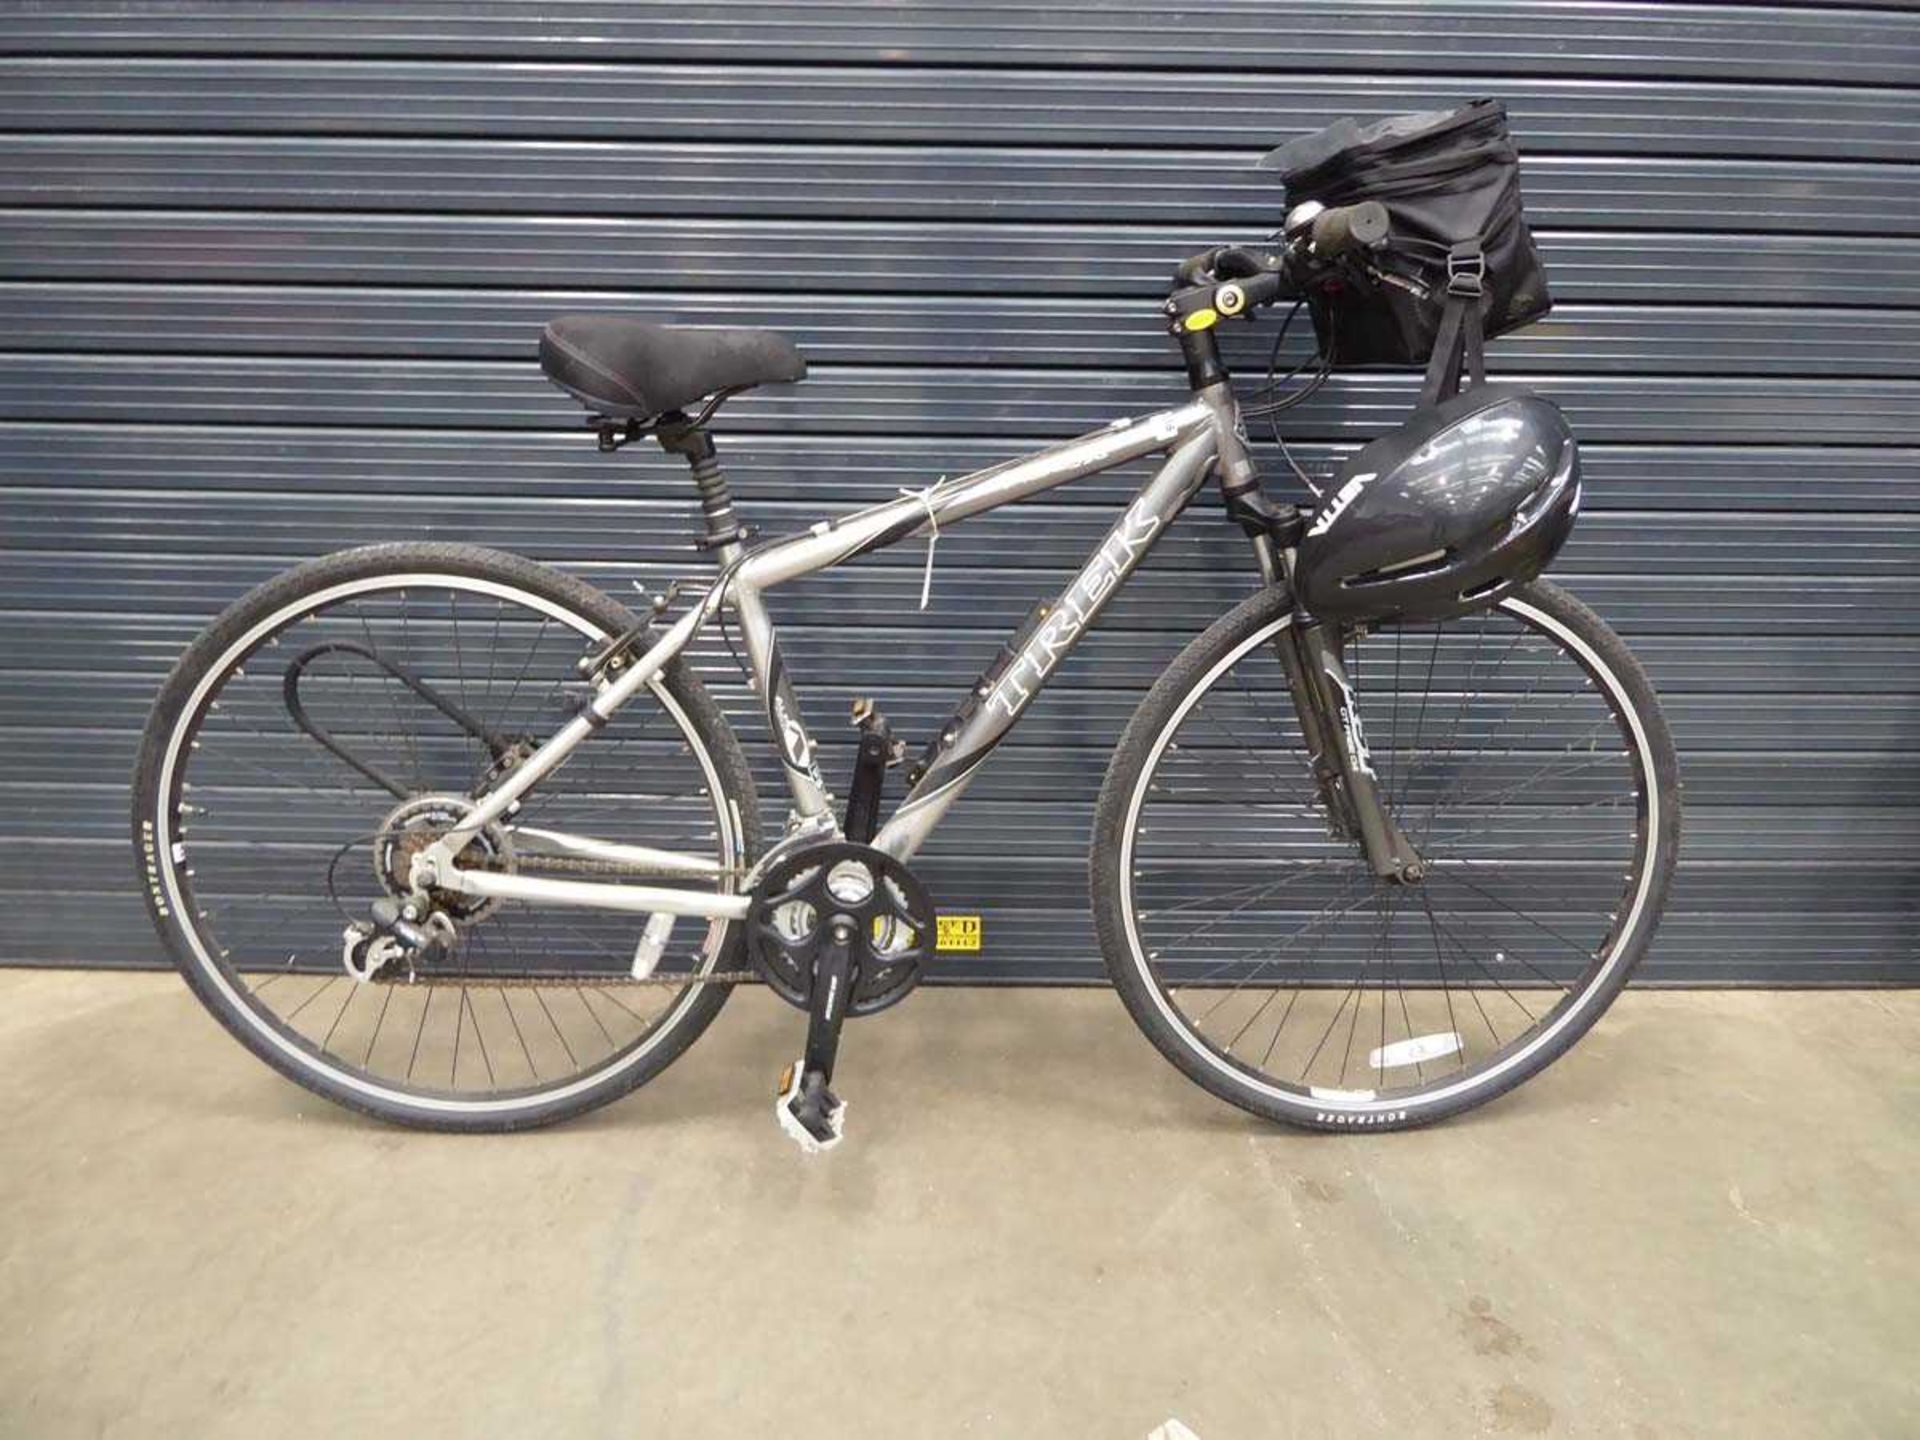 Trek grey town bike with front basket